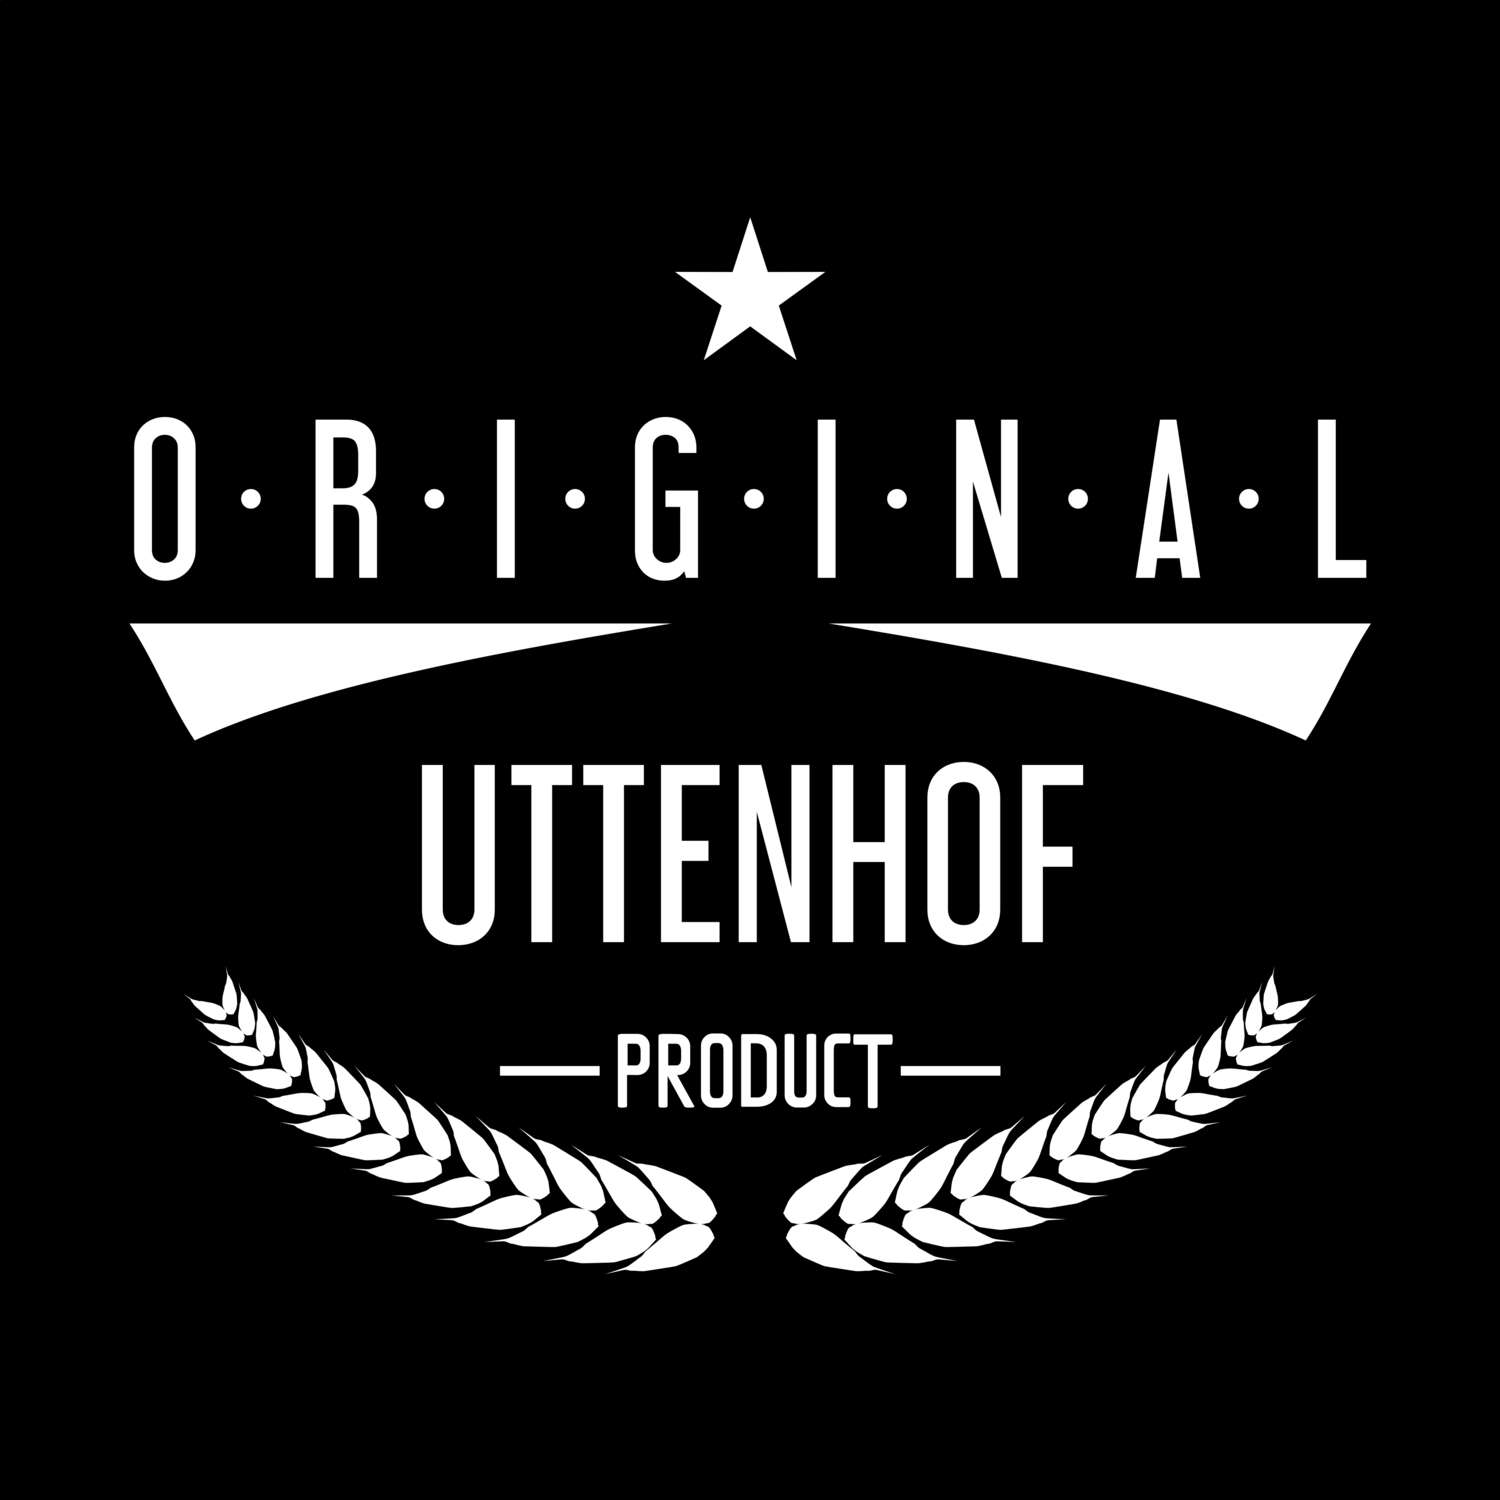 Uttenhof T-Shirt »Original Product«